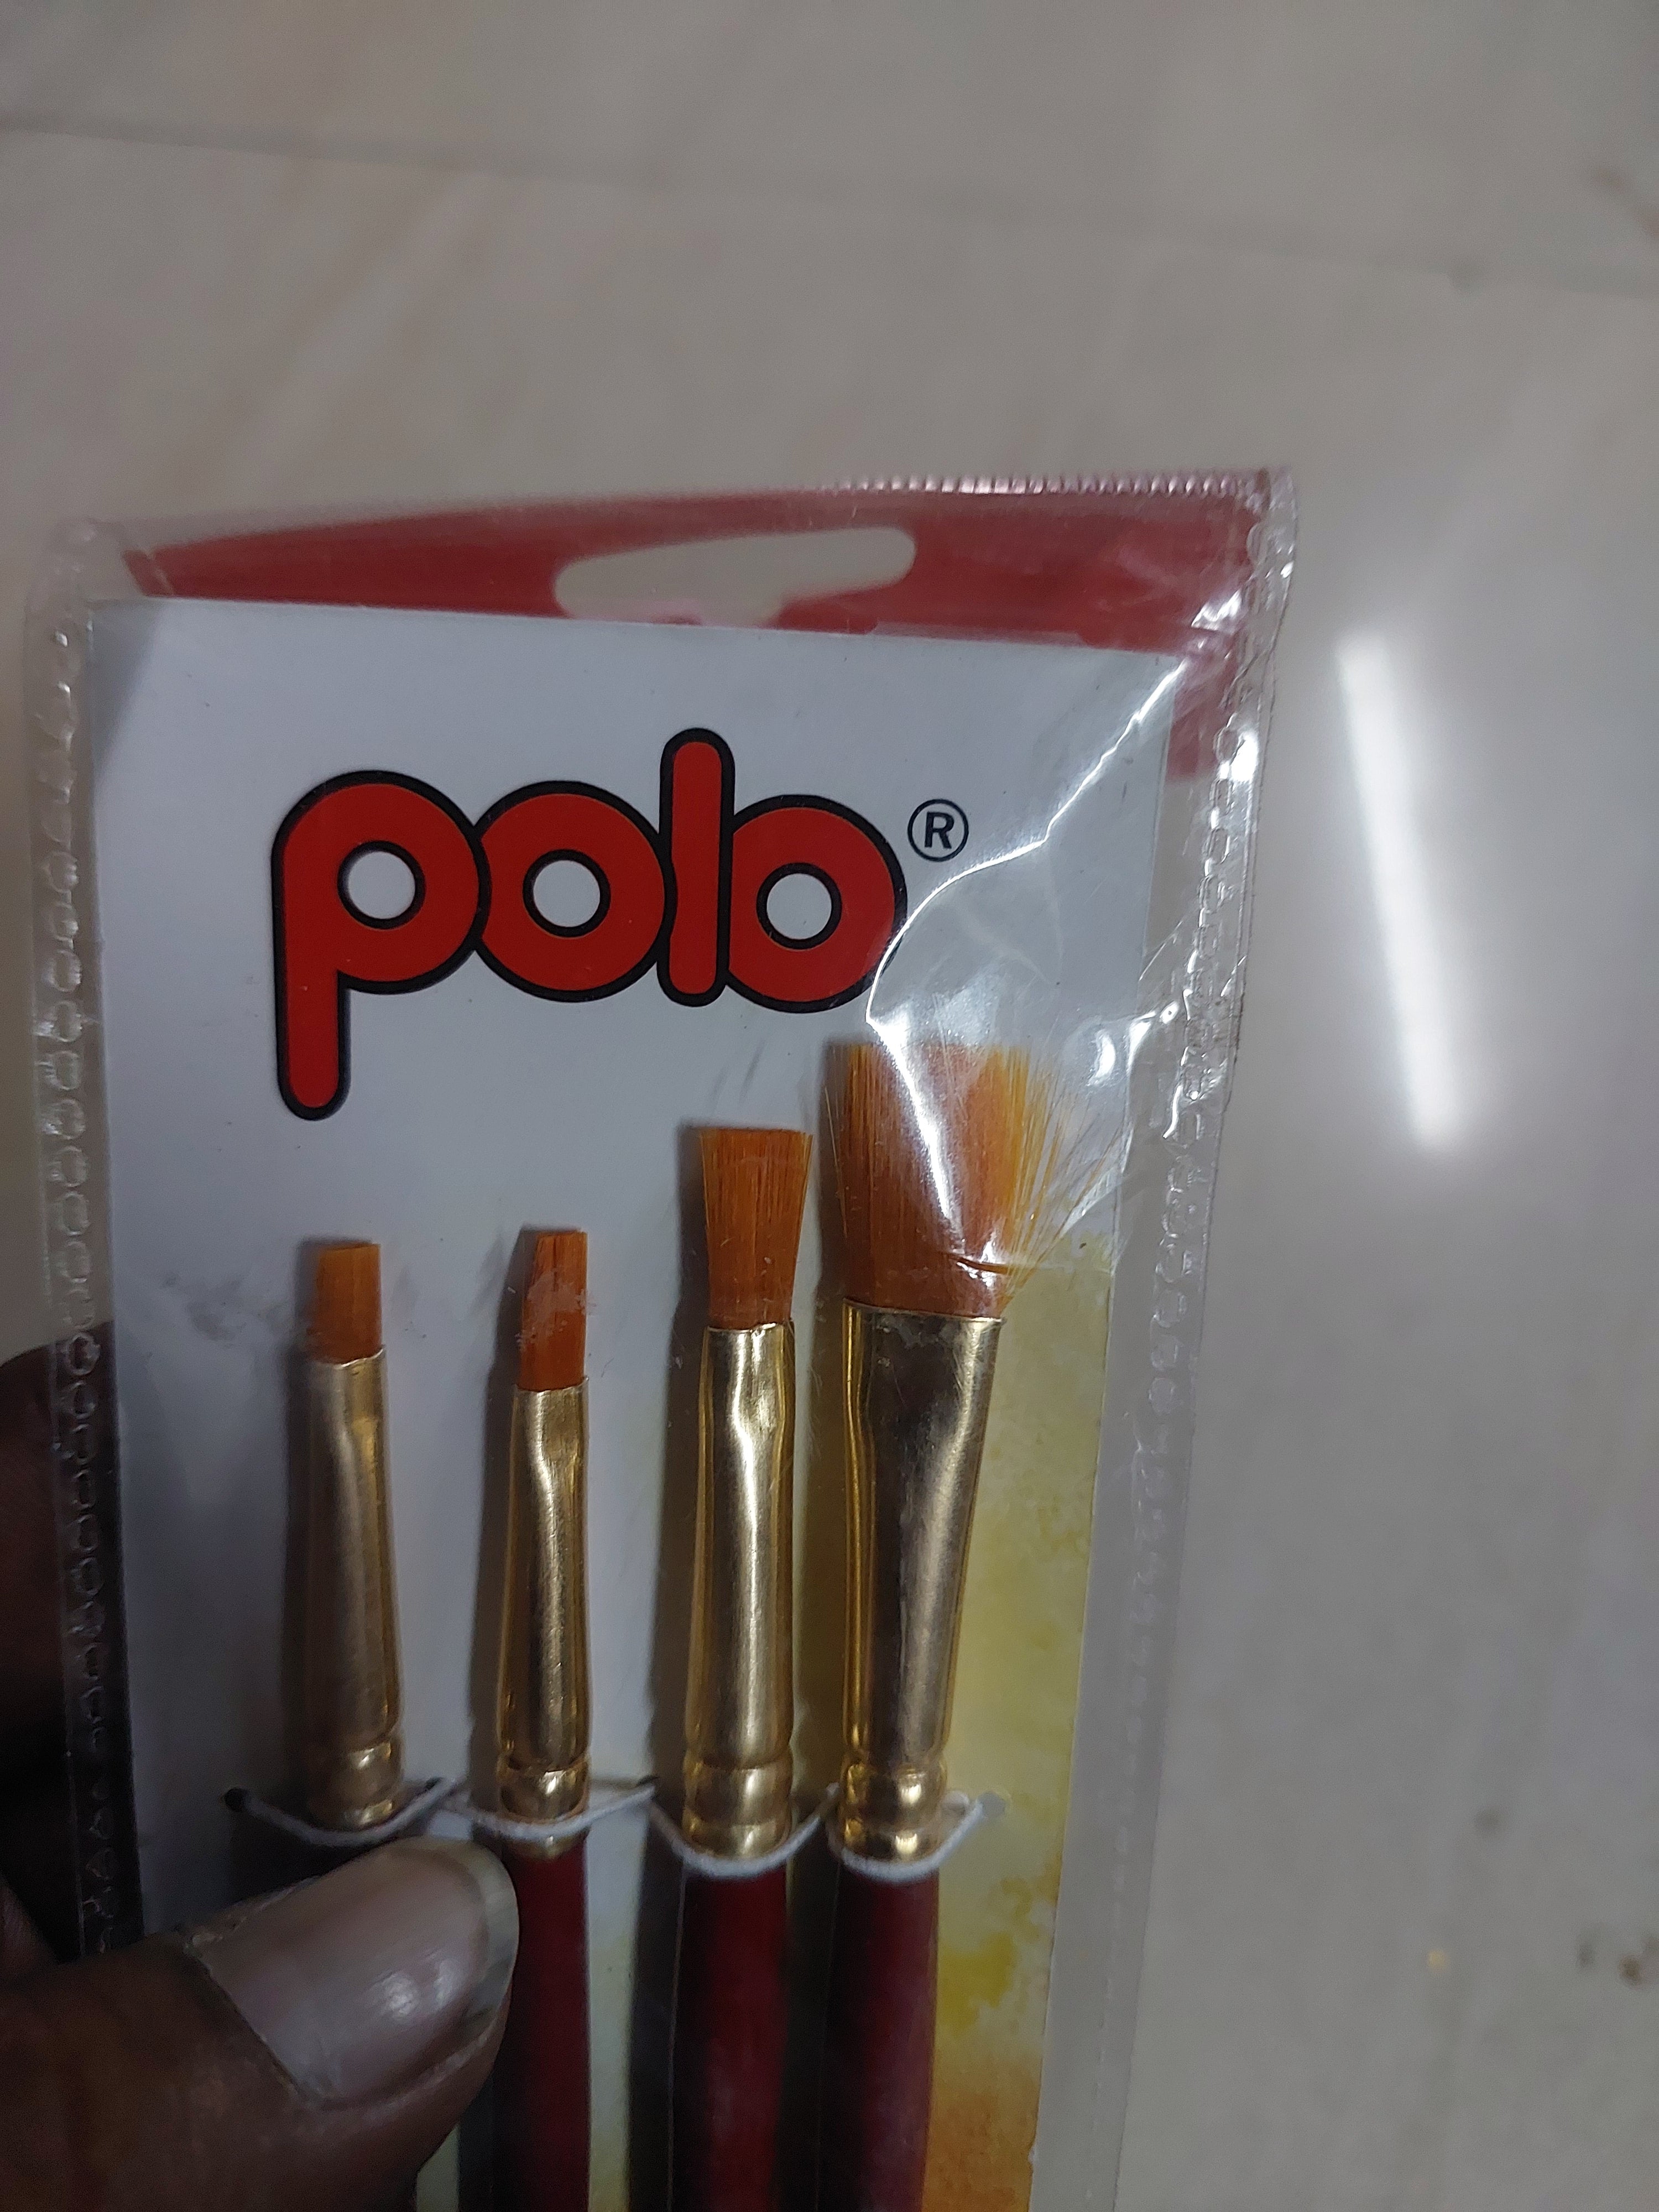 Polo 4 in 1 Flat Brush set - 1 set